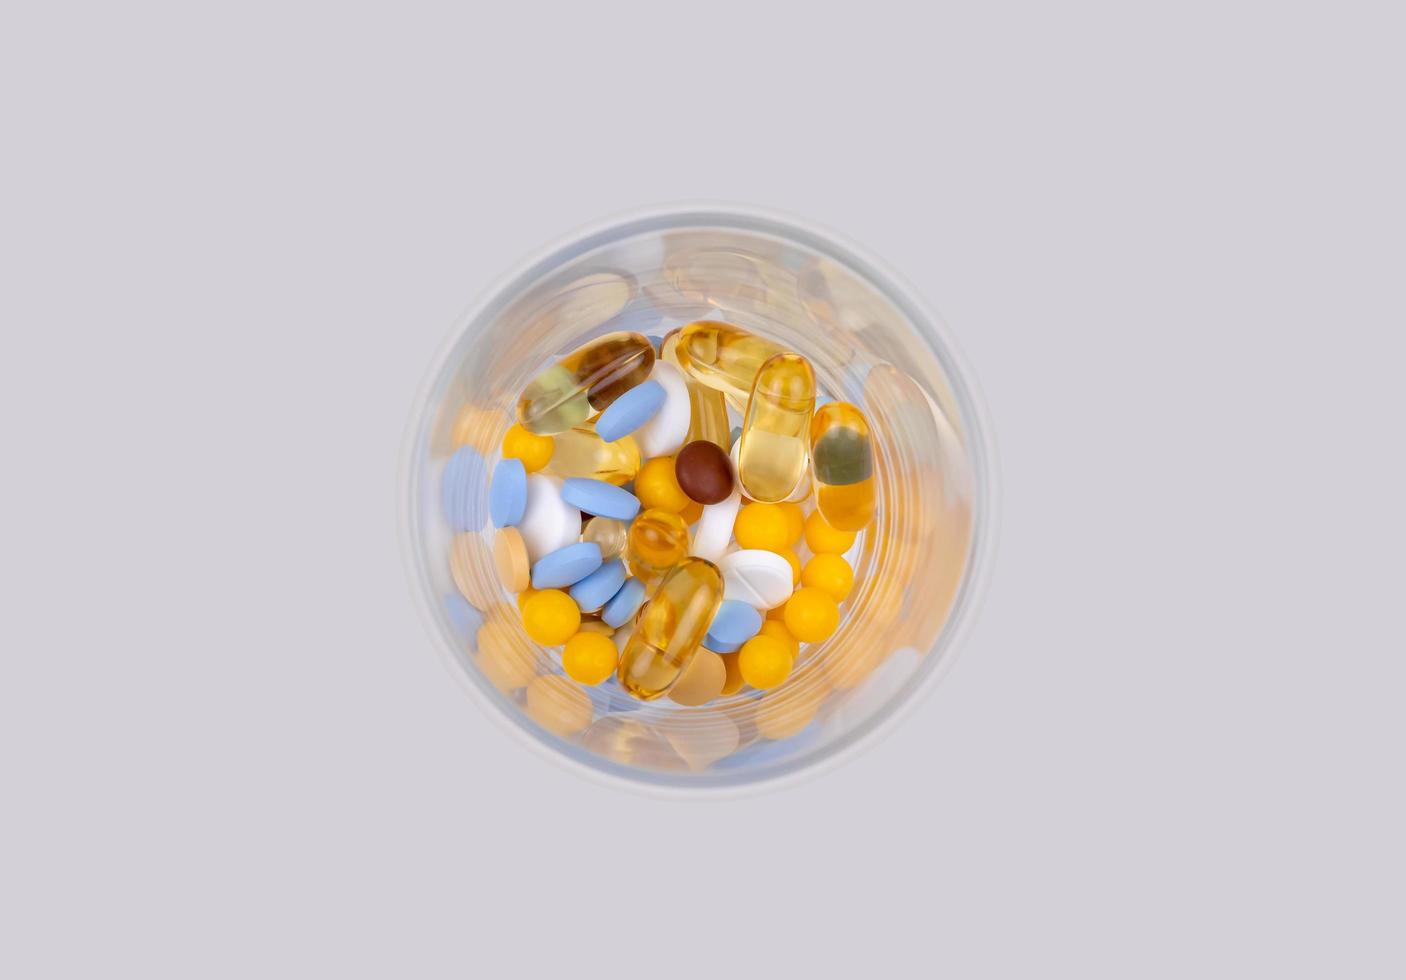 dose dos comprimidos coloridos no copo foto